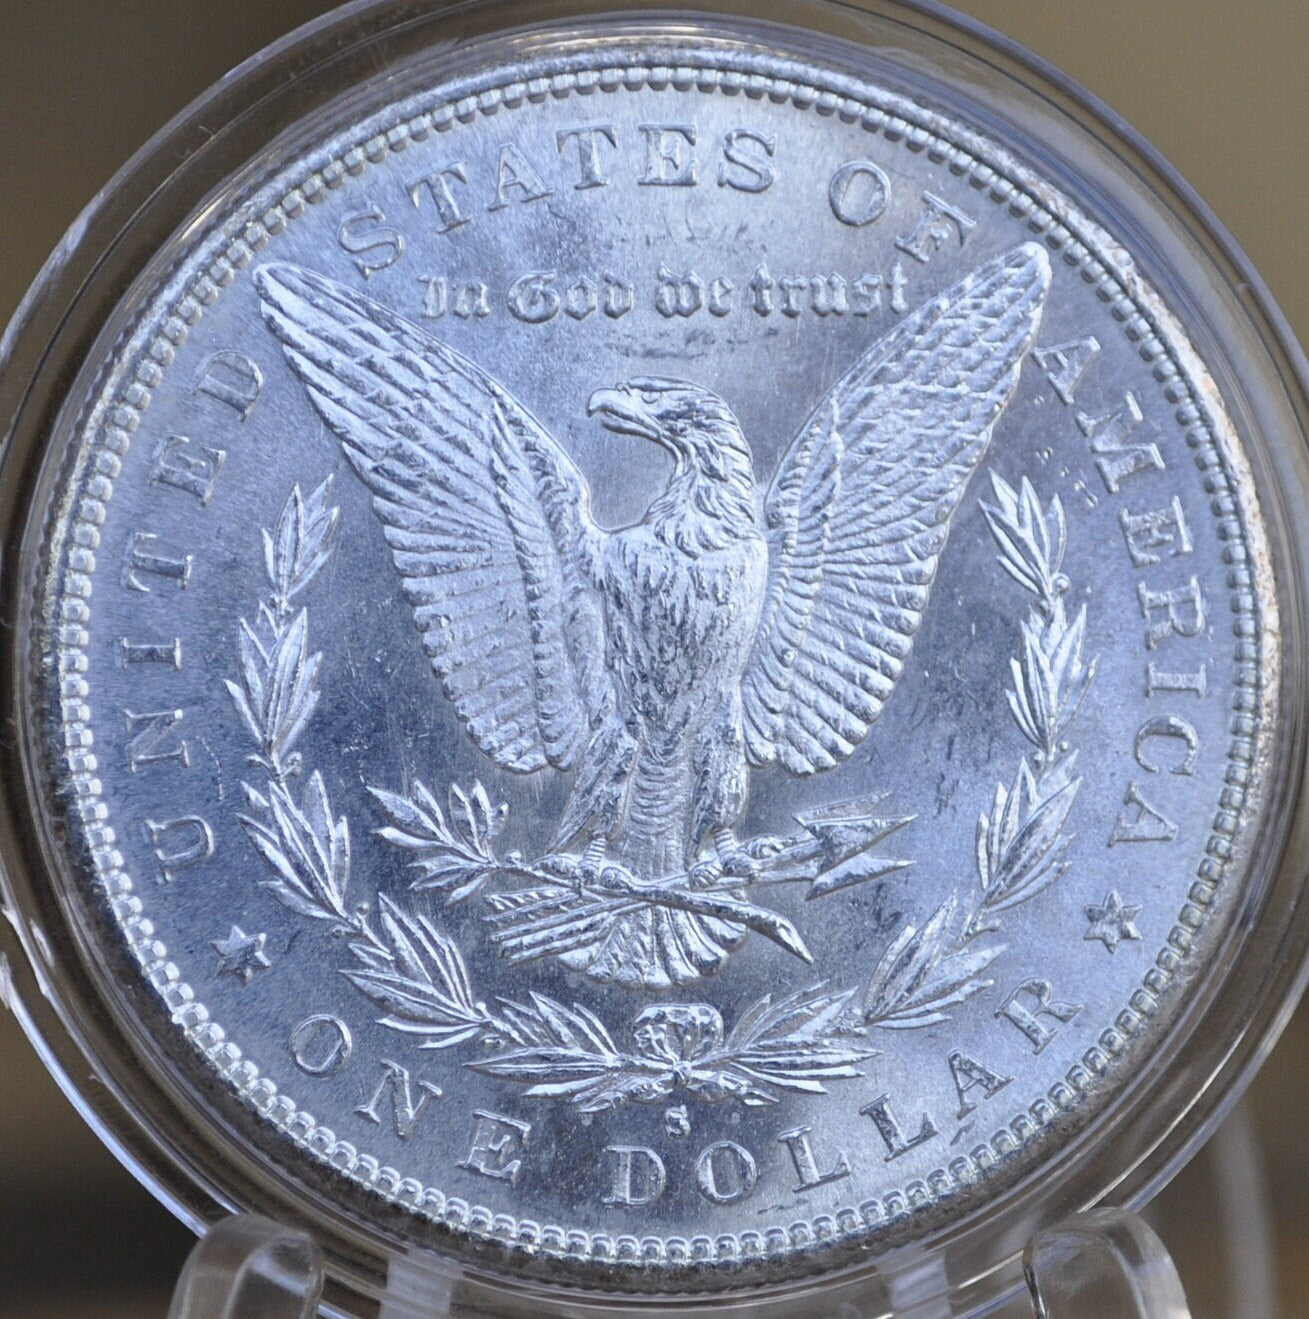 1881-S Morgan Silver Dollar - Choose by Grade / Condition - San Francisco Mint - 1881 S Morgan Dollar - High Grade, Beautiful